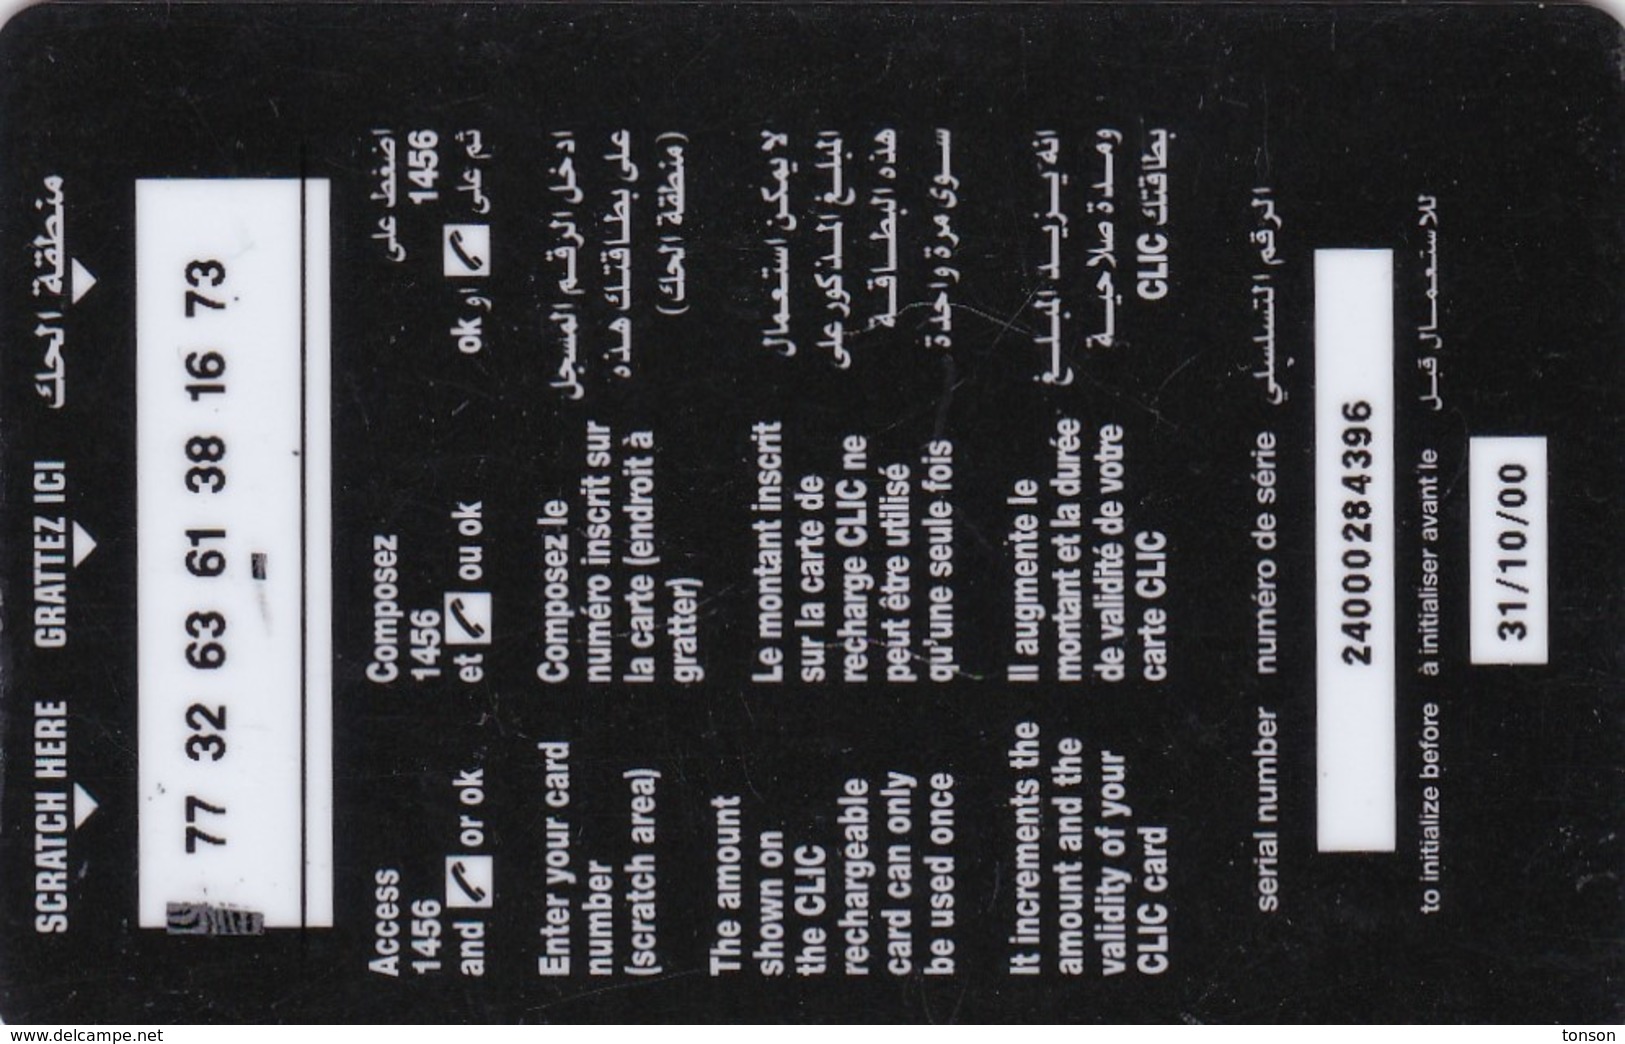 Lebanon, LB-CLC-REF-0014C, 44$, Clic Recharge Card, Family, 2 Scans.   Exp. : 31/10//00 - Liban